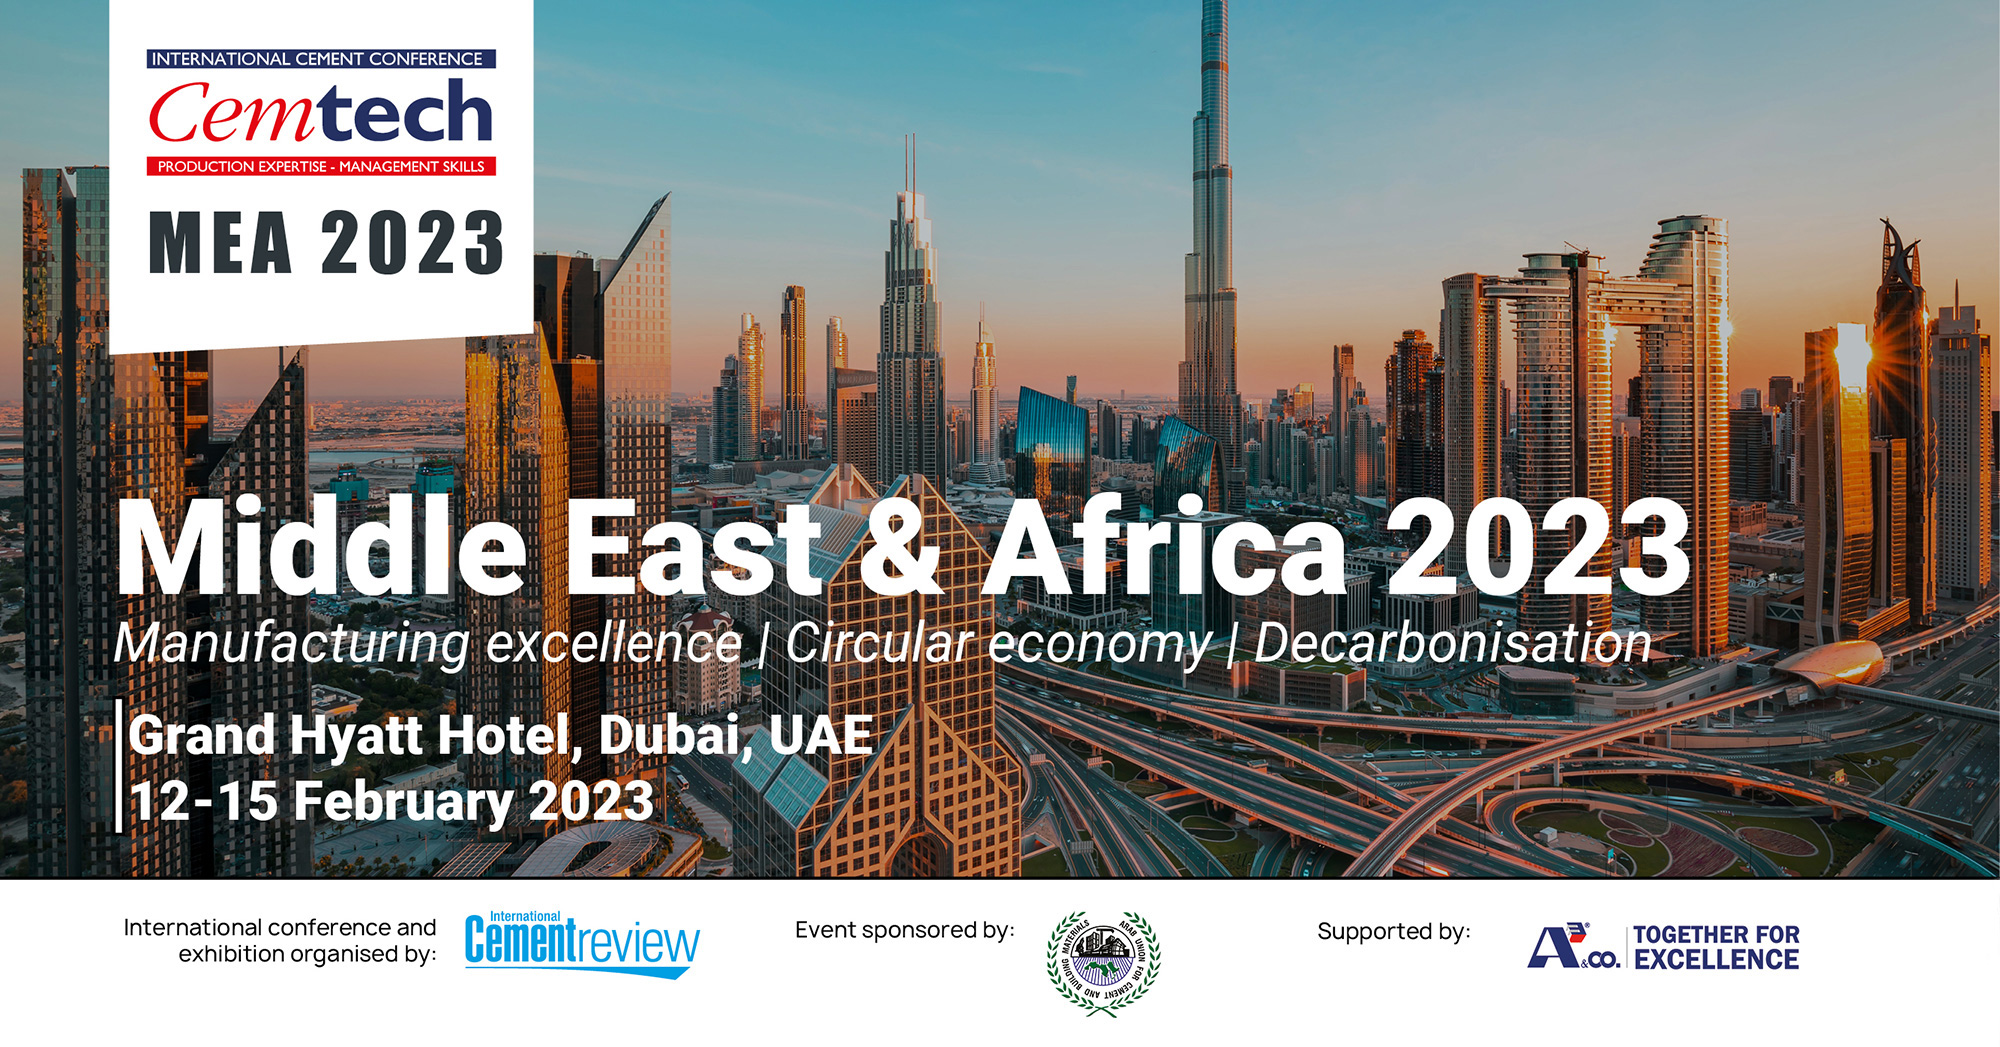 Cemtech Middle East & Africa 2023 cement conference, Dubai, UAE